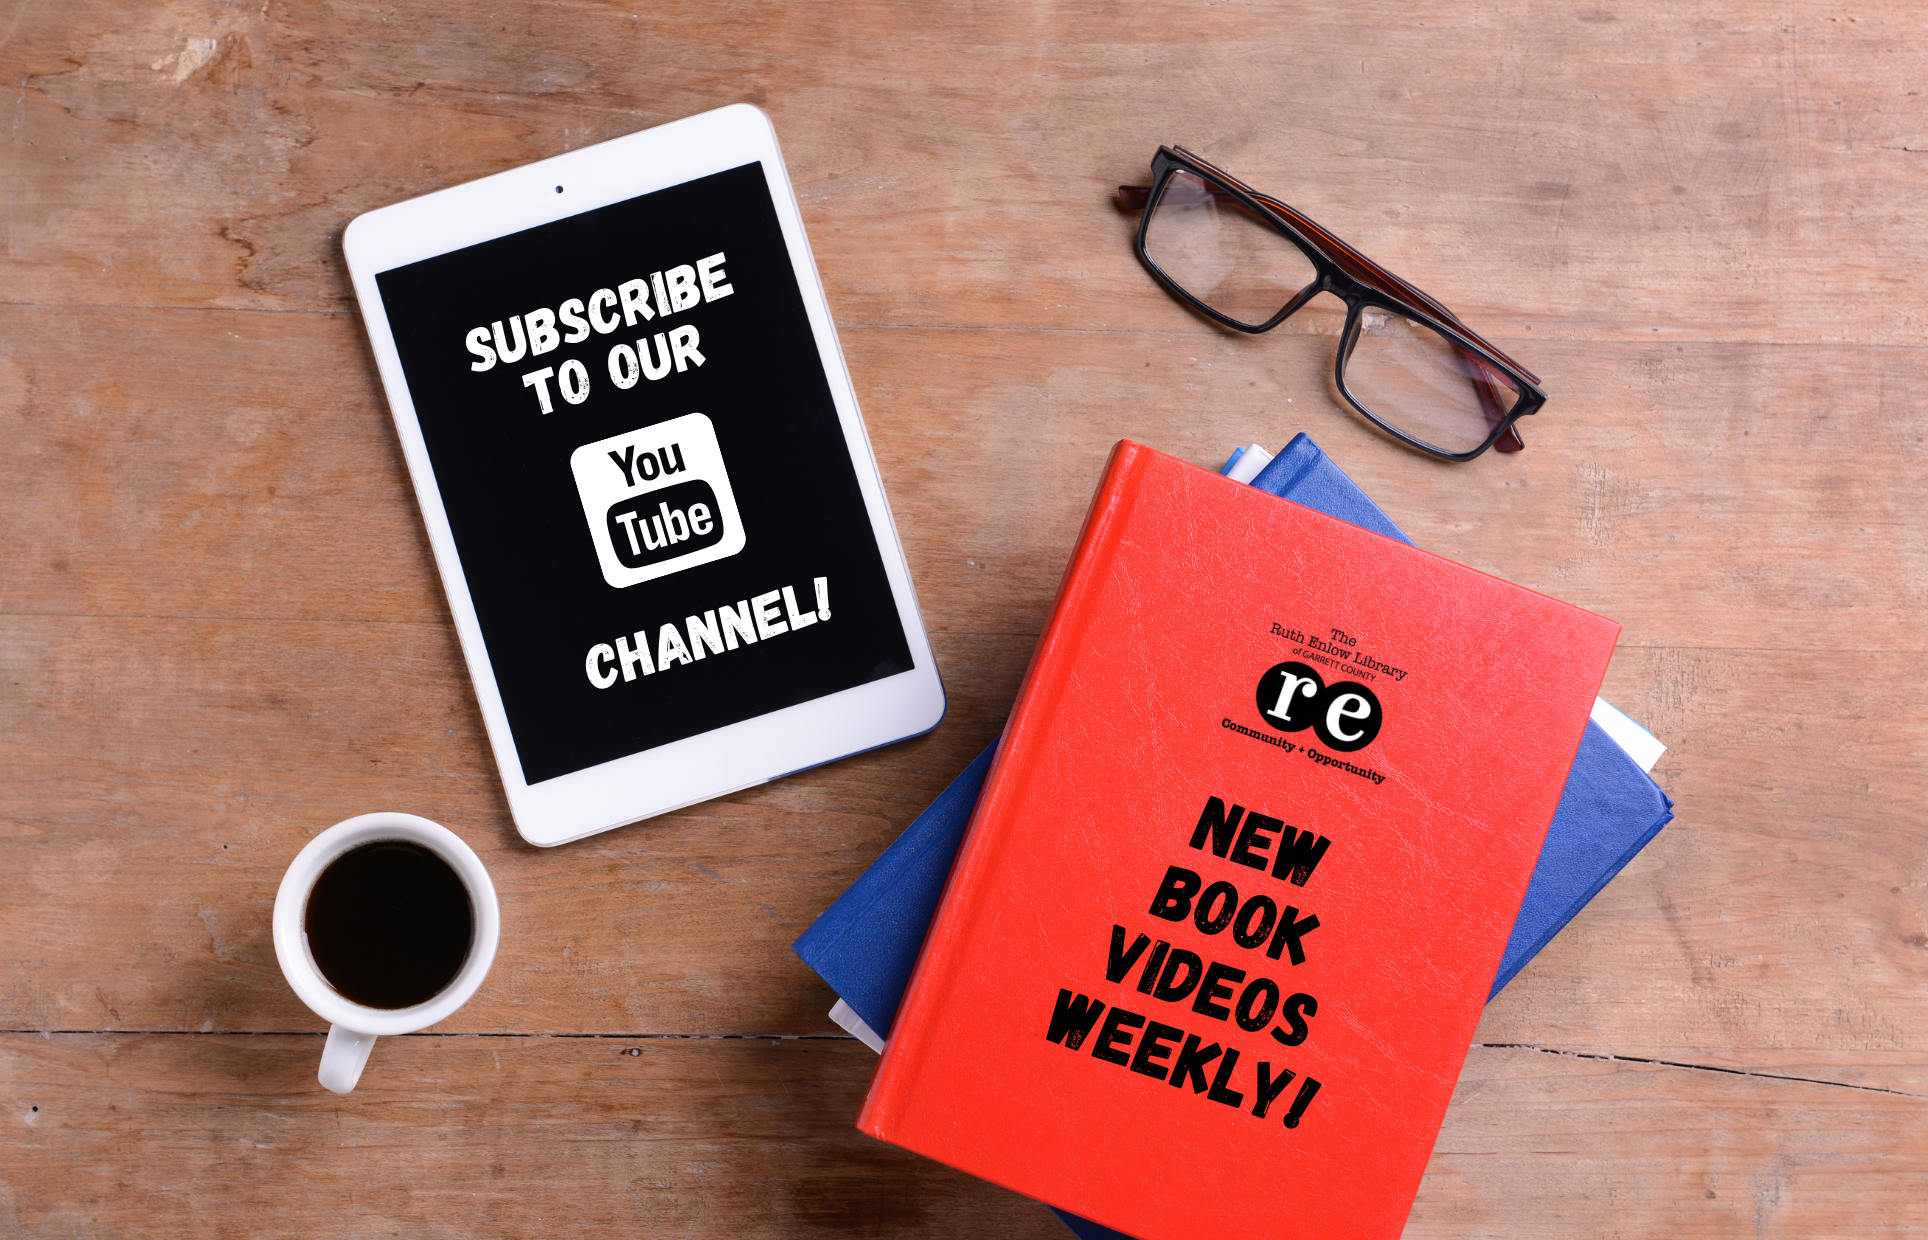 RELIB YouTube Channel (New Book Videos)